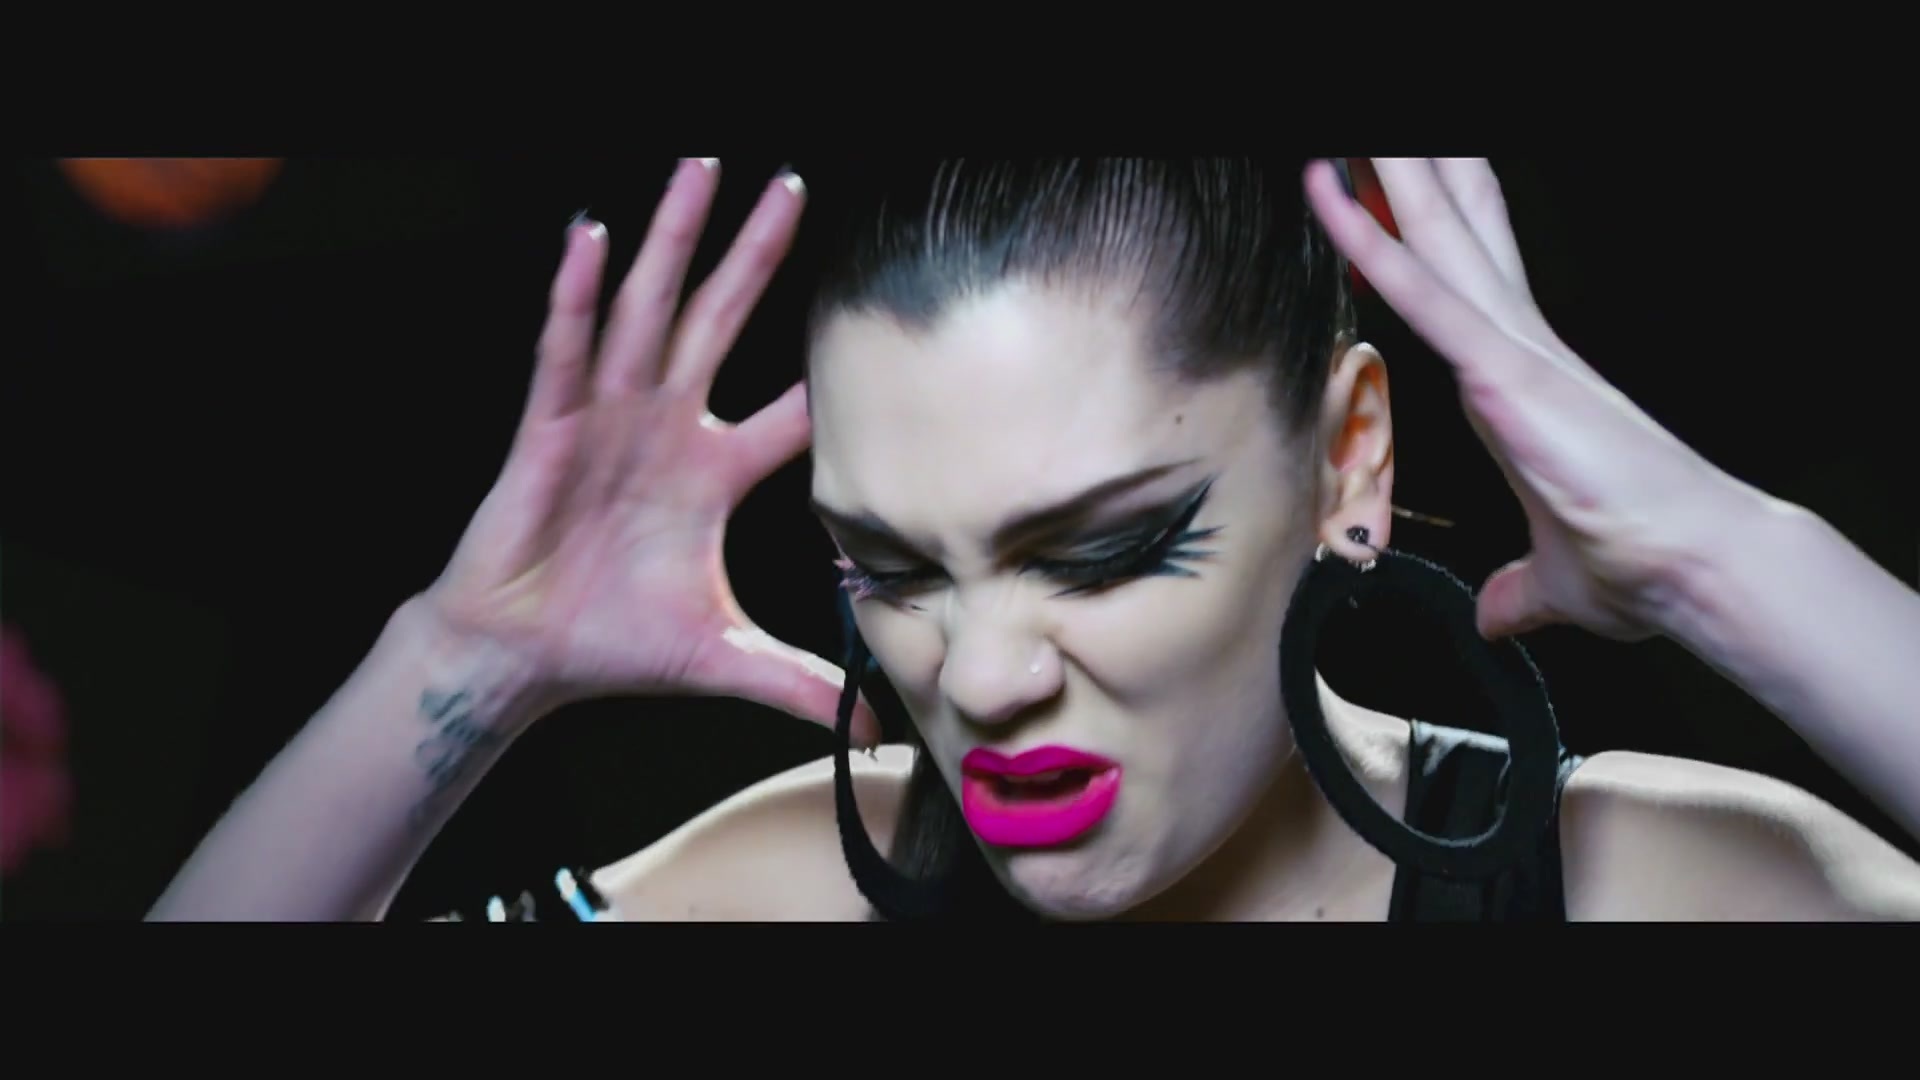 Nobody's Perfect [Music Video] - Jessie J Image (21699904) - Fanpop1920 x 1080